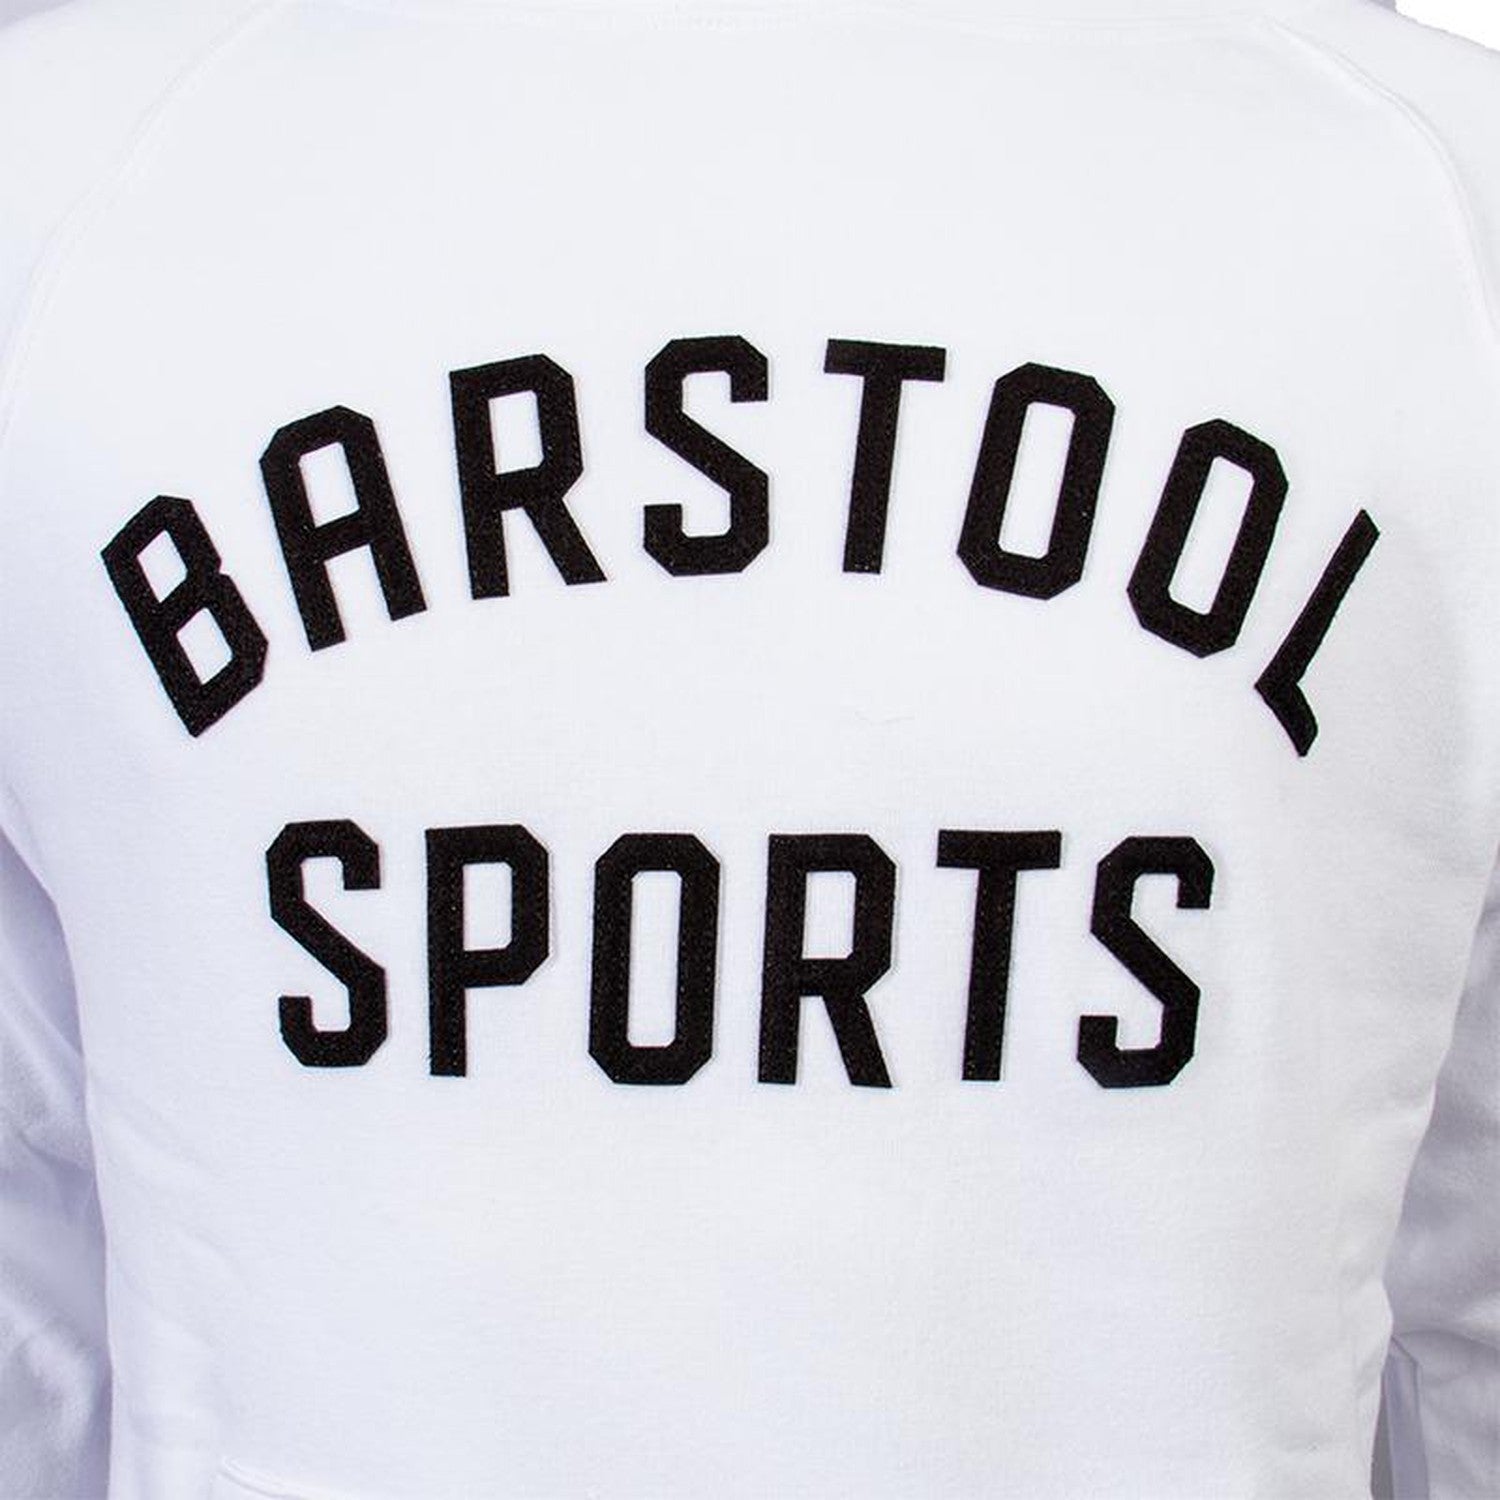 Barstool Sportiqe Applique Olsen Hoodie-Hoodies-Barstool Sports-Barstool Sports